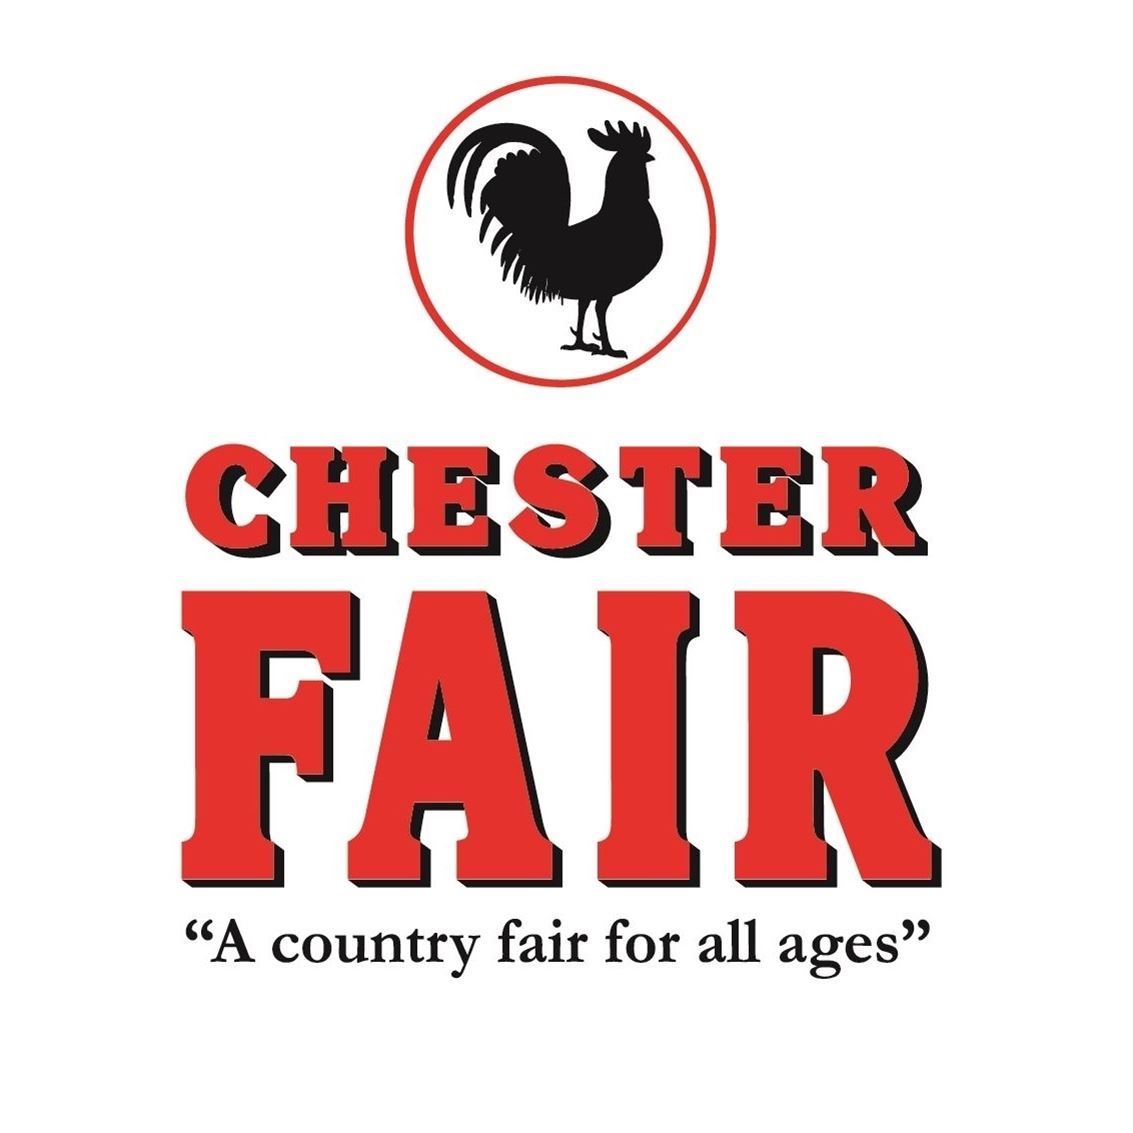 Chester Fair